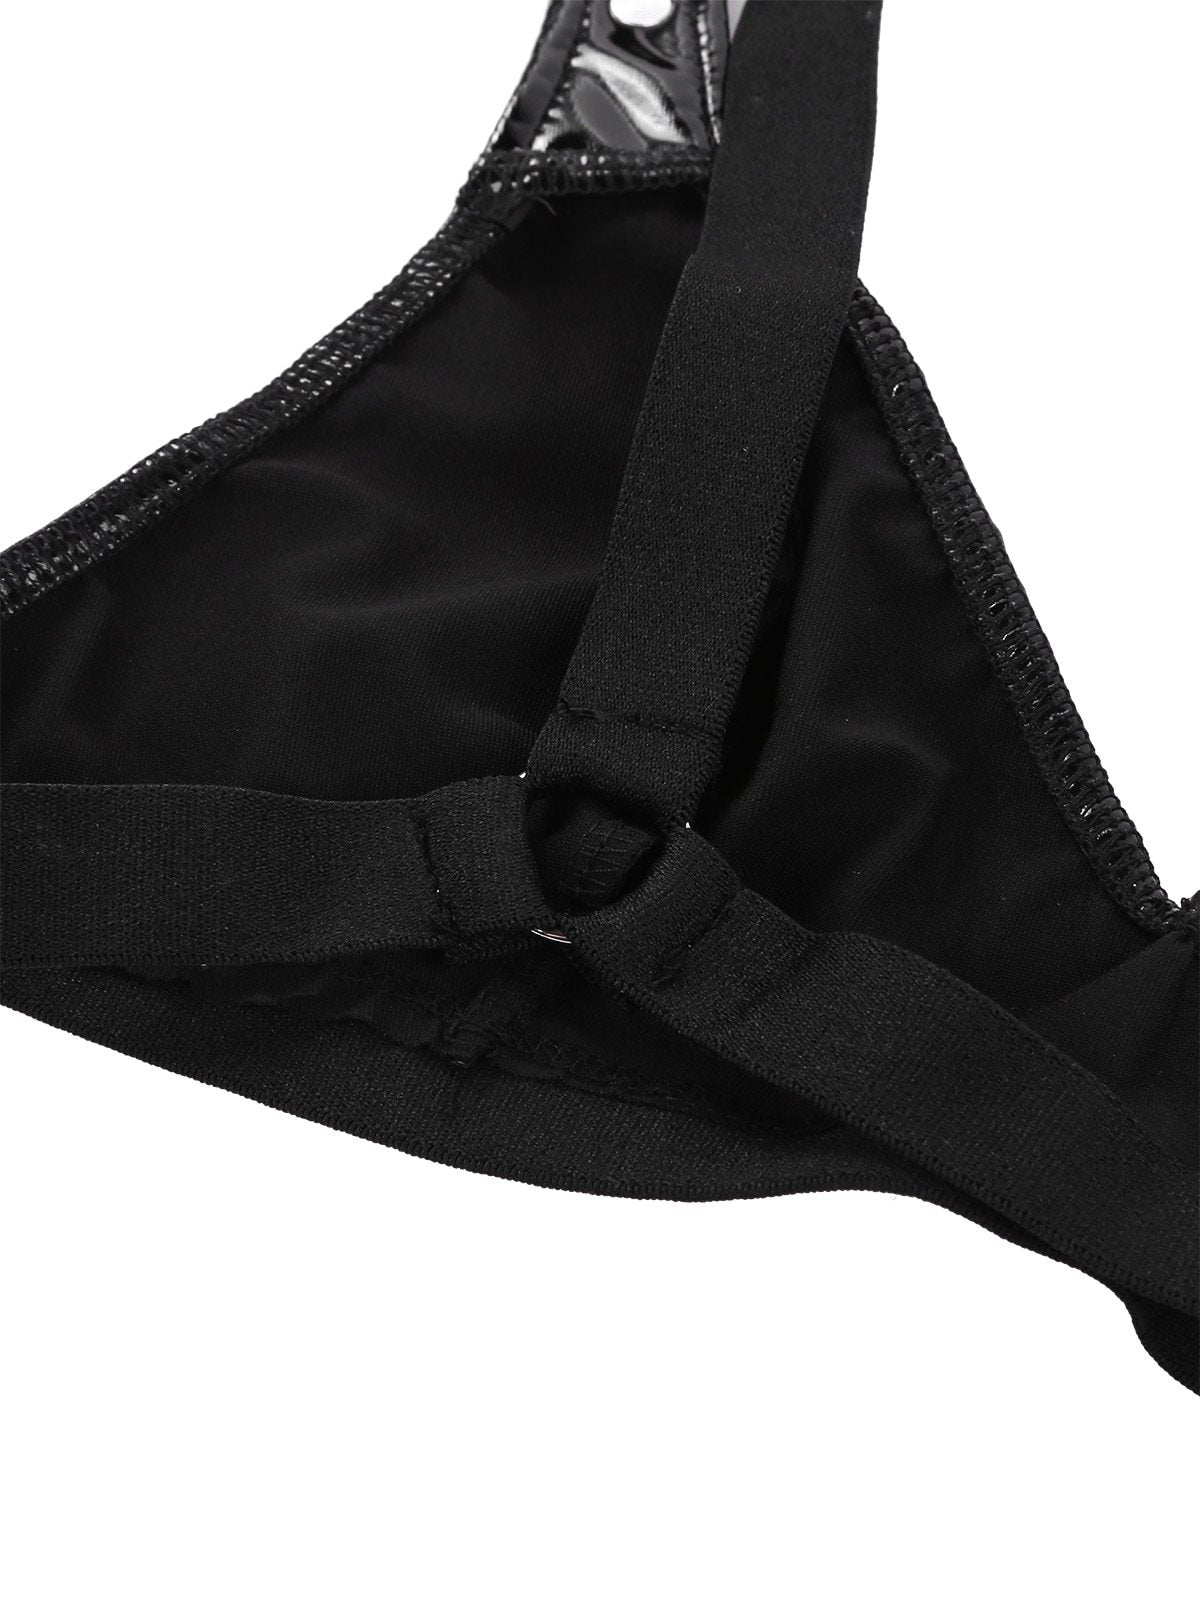 Sexy Women's Underwear Set / Rave Underwear / Elastic Straps Bikini Bra Tops with Mini G-string - HARD'N'HEAVY